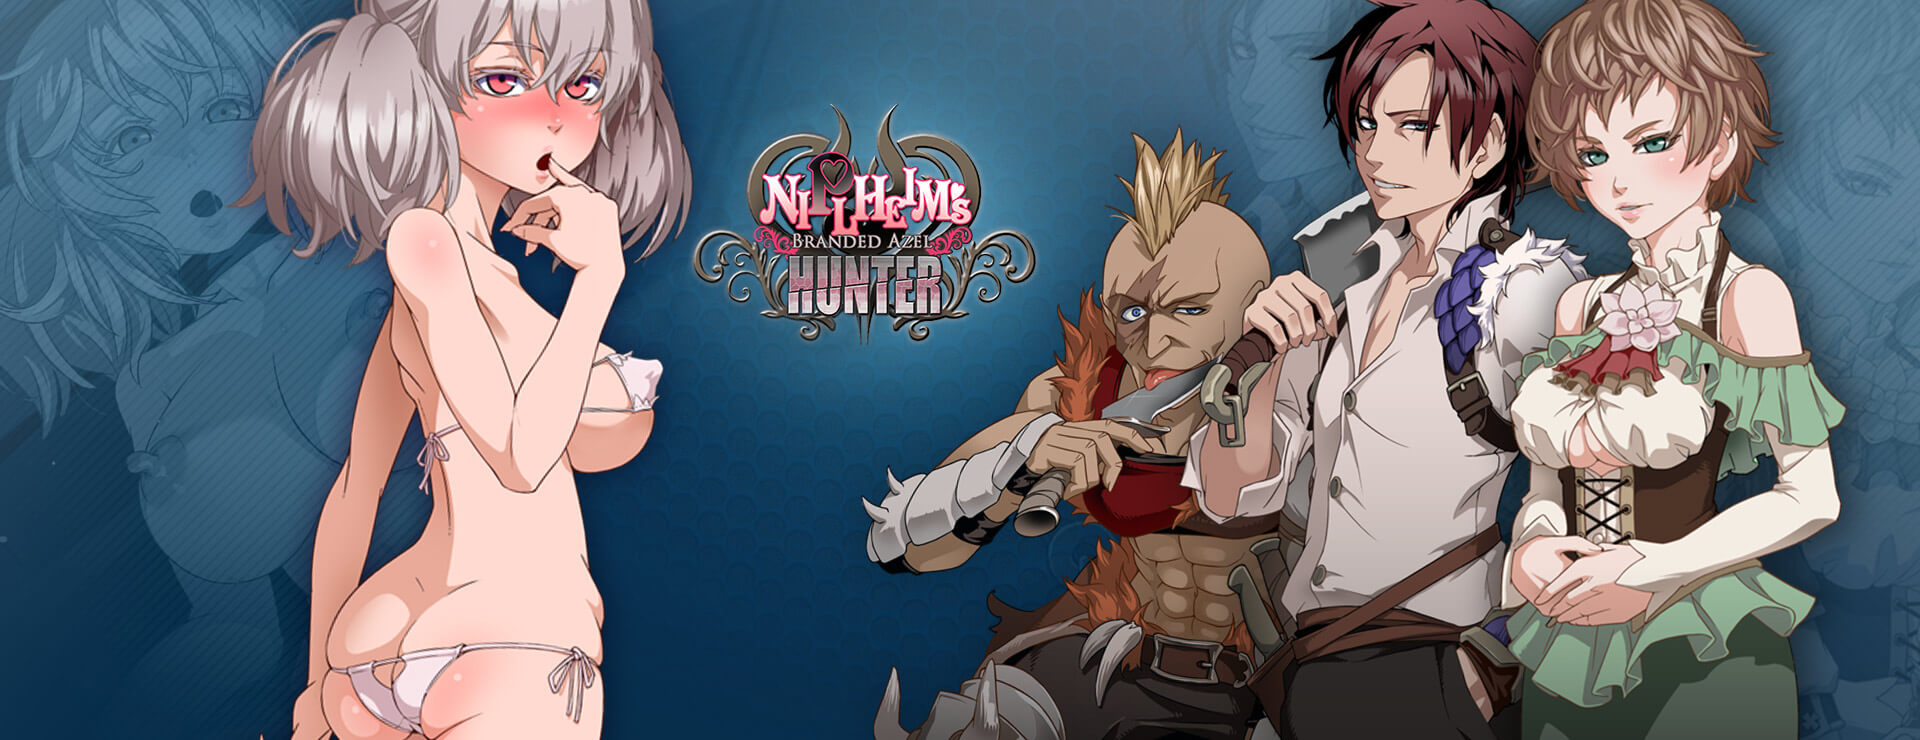 Niplheim's Hunter - Branded Azel - RPG Game